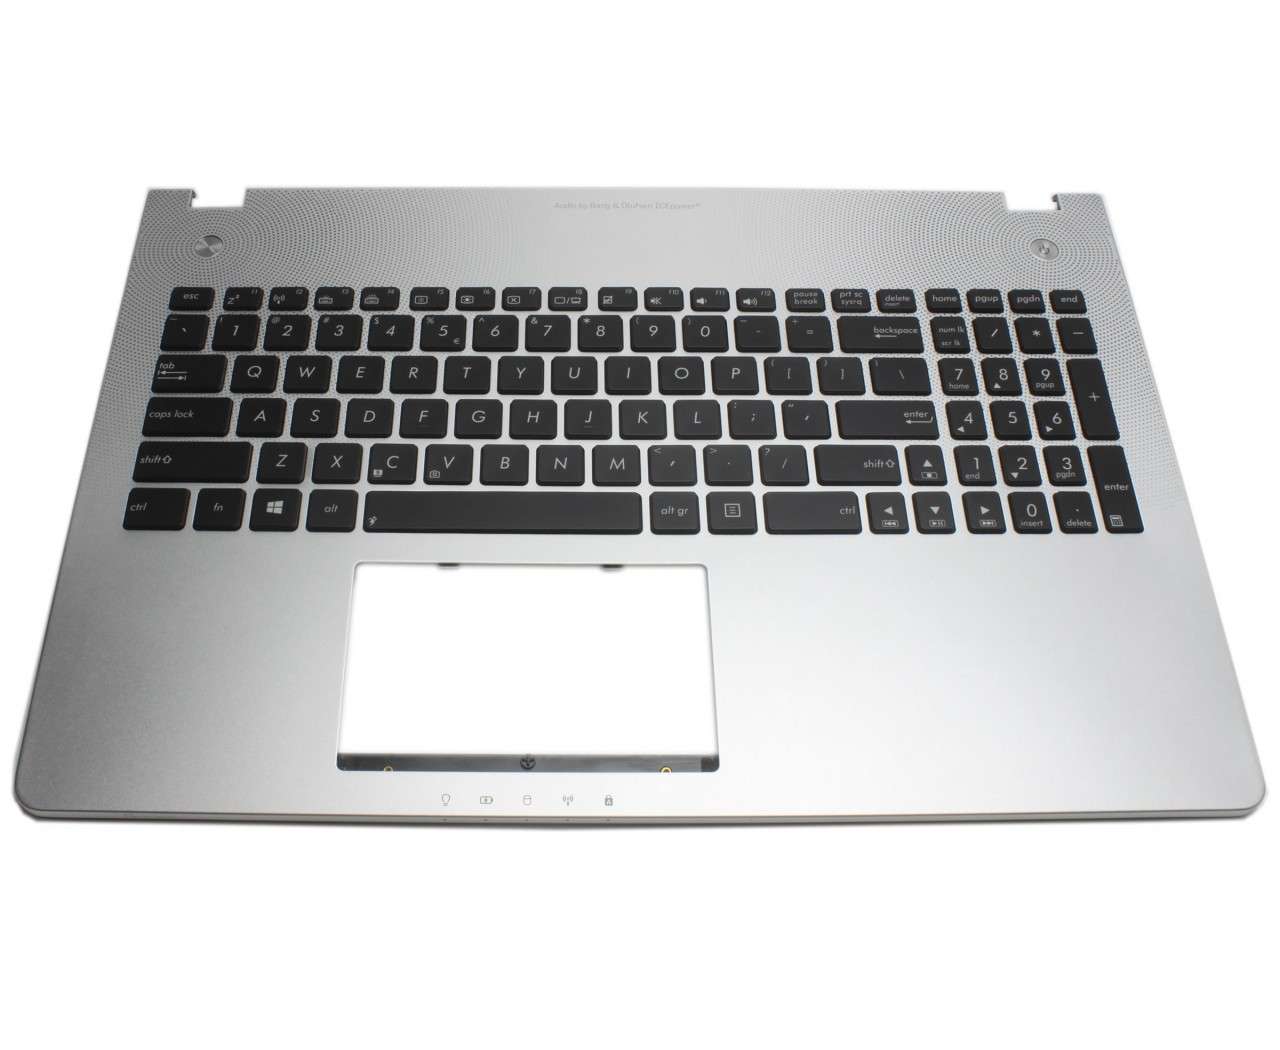 Tastatura Asus N56DY neagra cu Palmrest argintiu iluminata backlit fara Touchpad